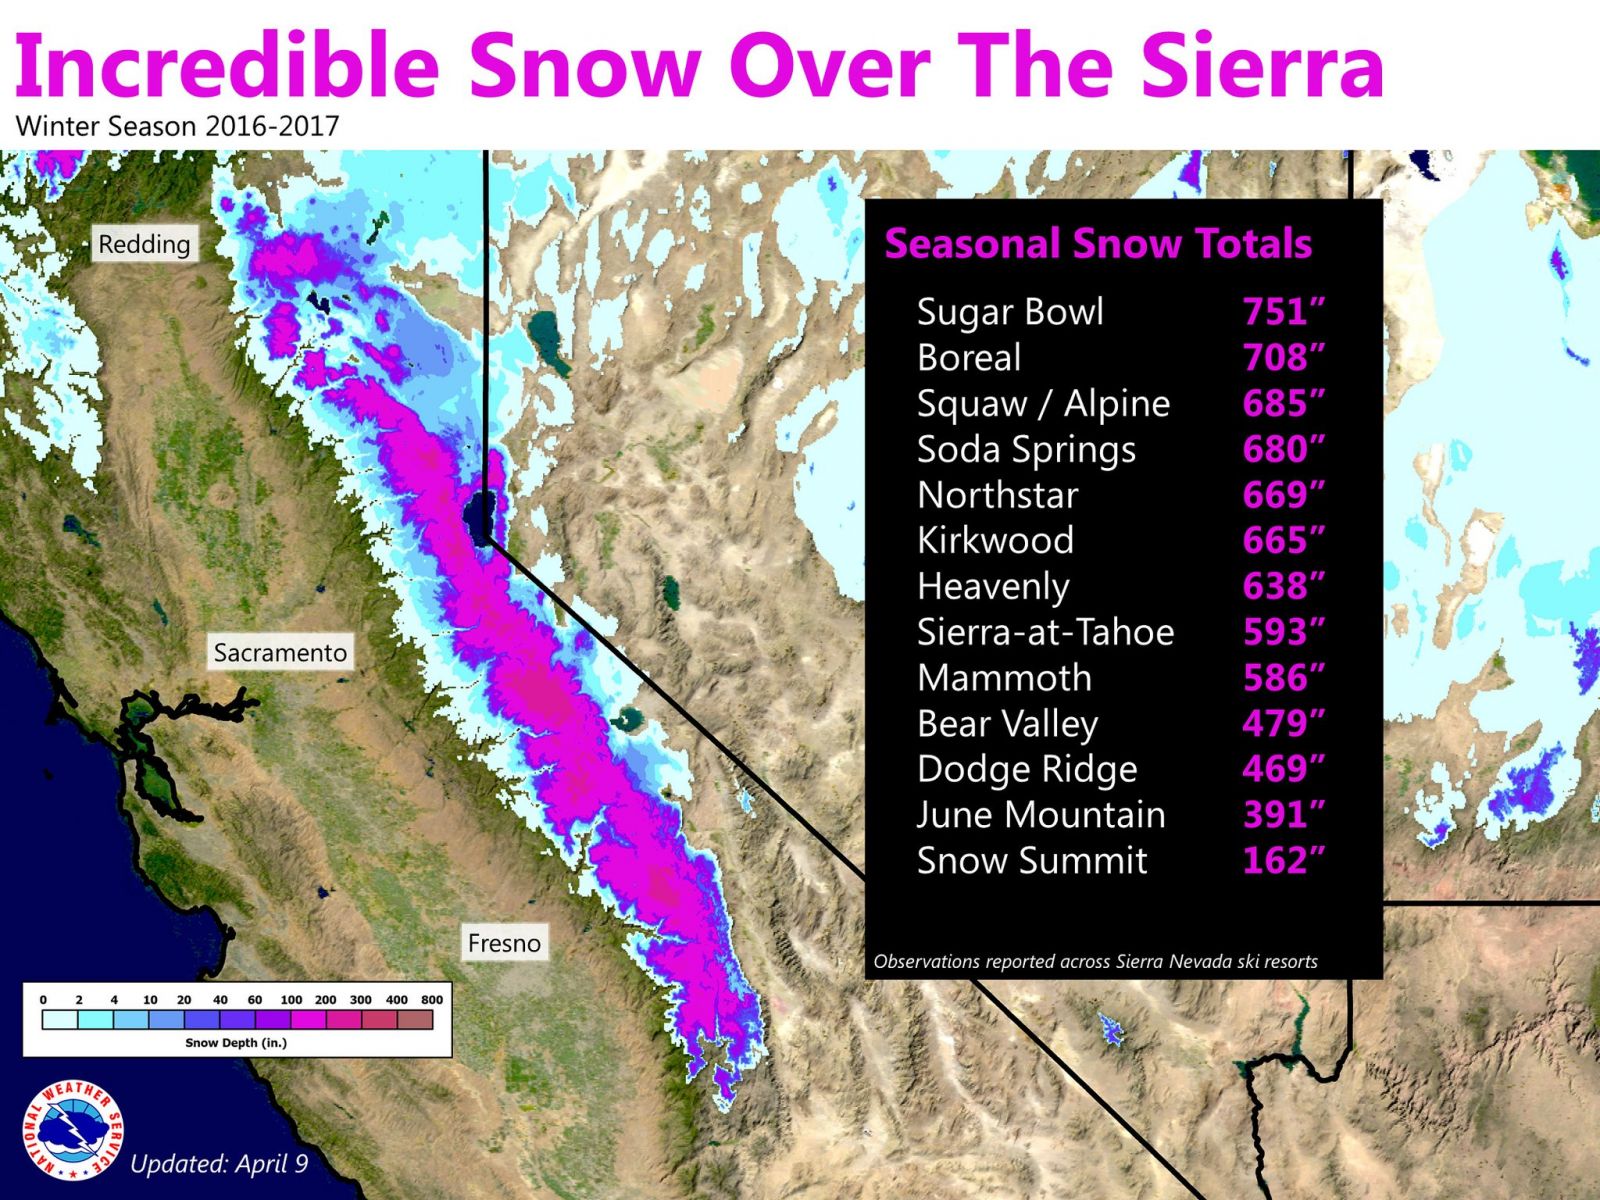 Snow totals for winter season 2016 - 17, Sierra Nevada